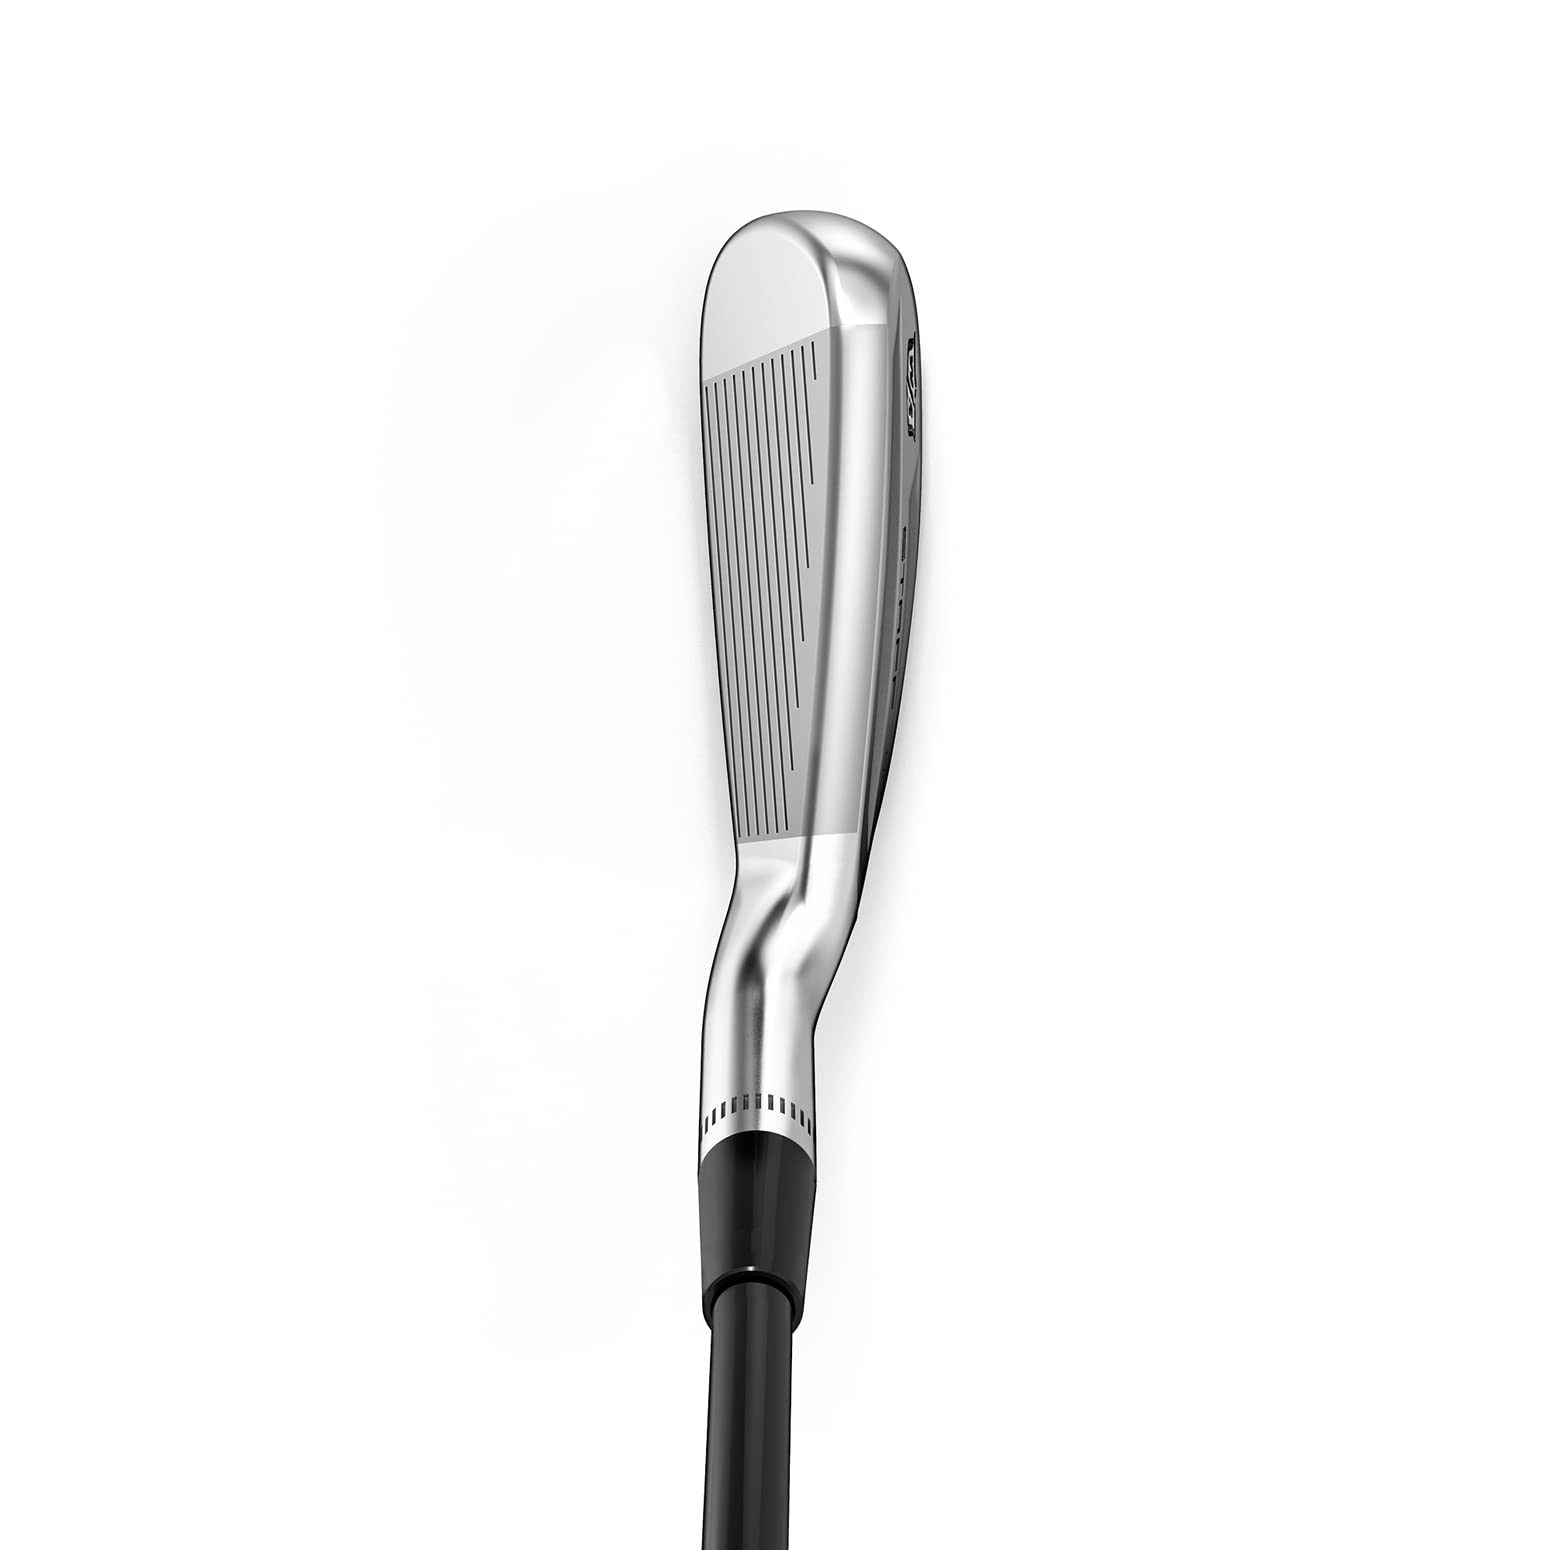 WILSON Staff Model Utility Men's Golf Irons - Graphite, Right Hand